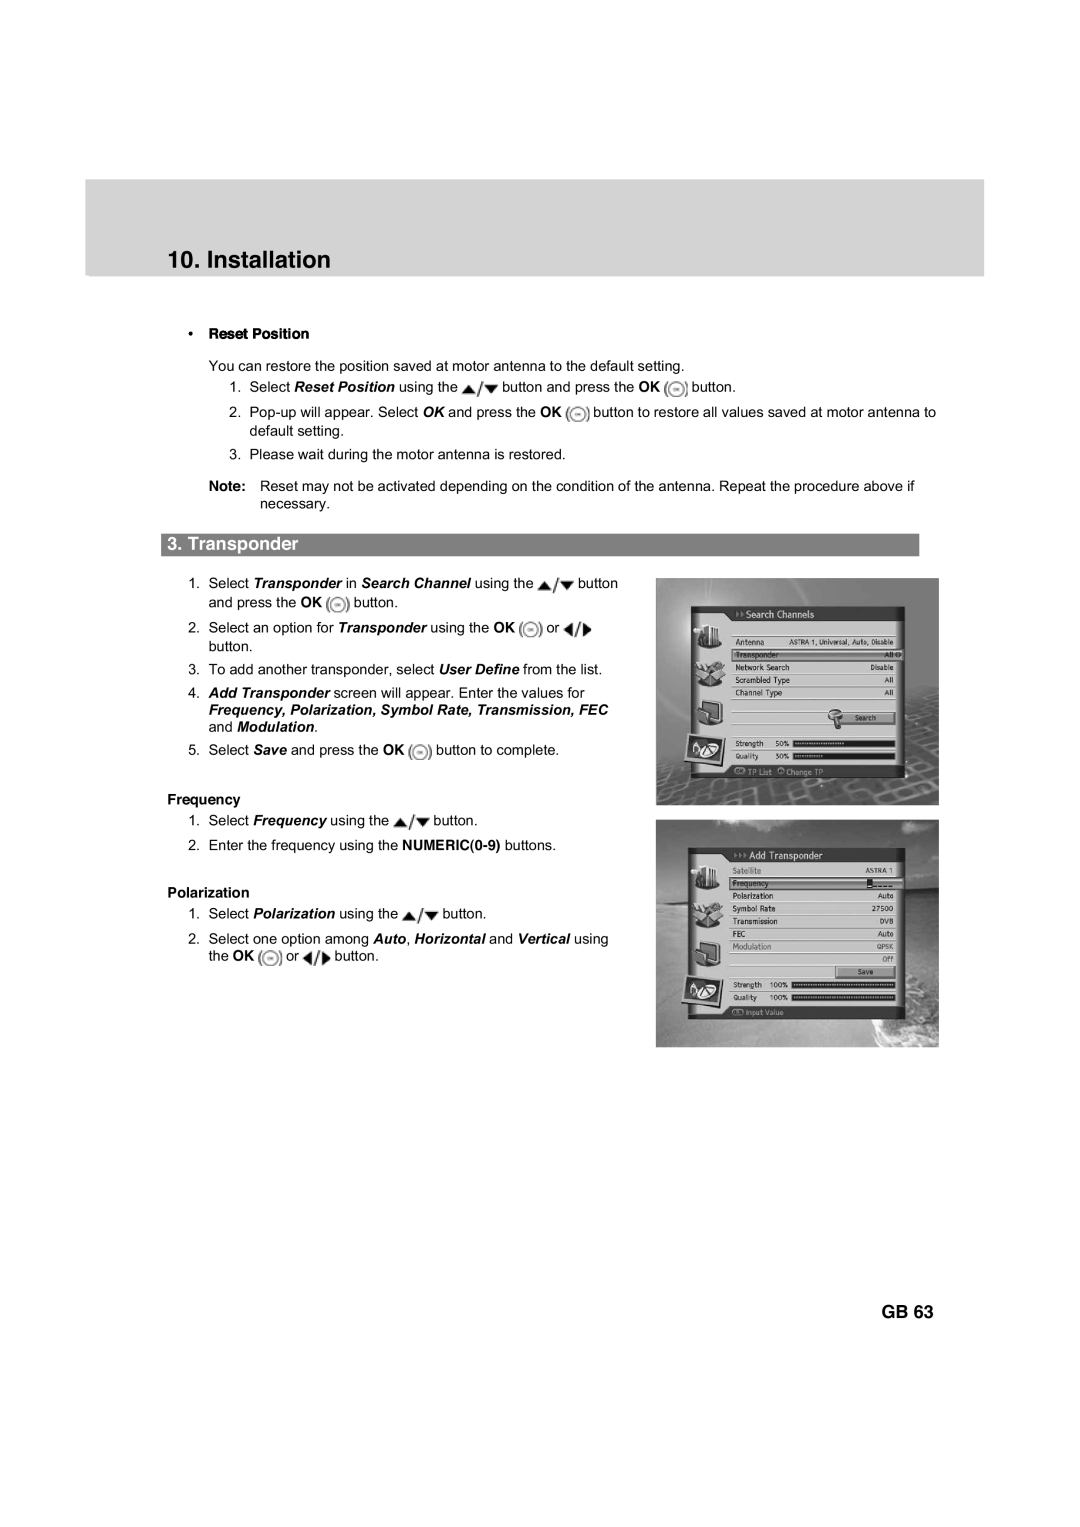 Humax HDCI-2000 manual Transponder, Reset Position, Frequency, Polarization, Installation 